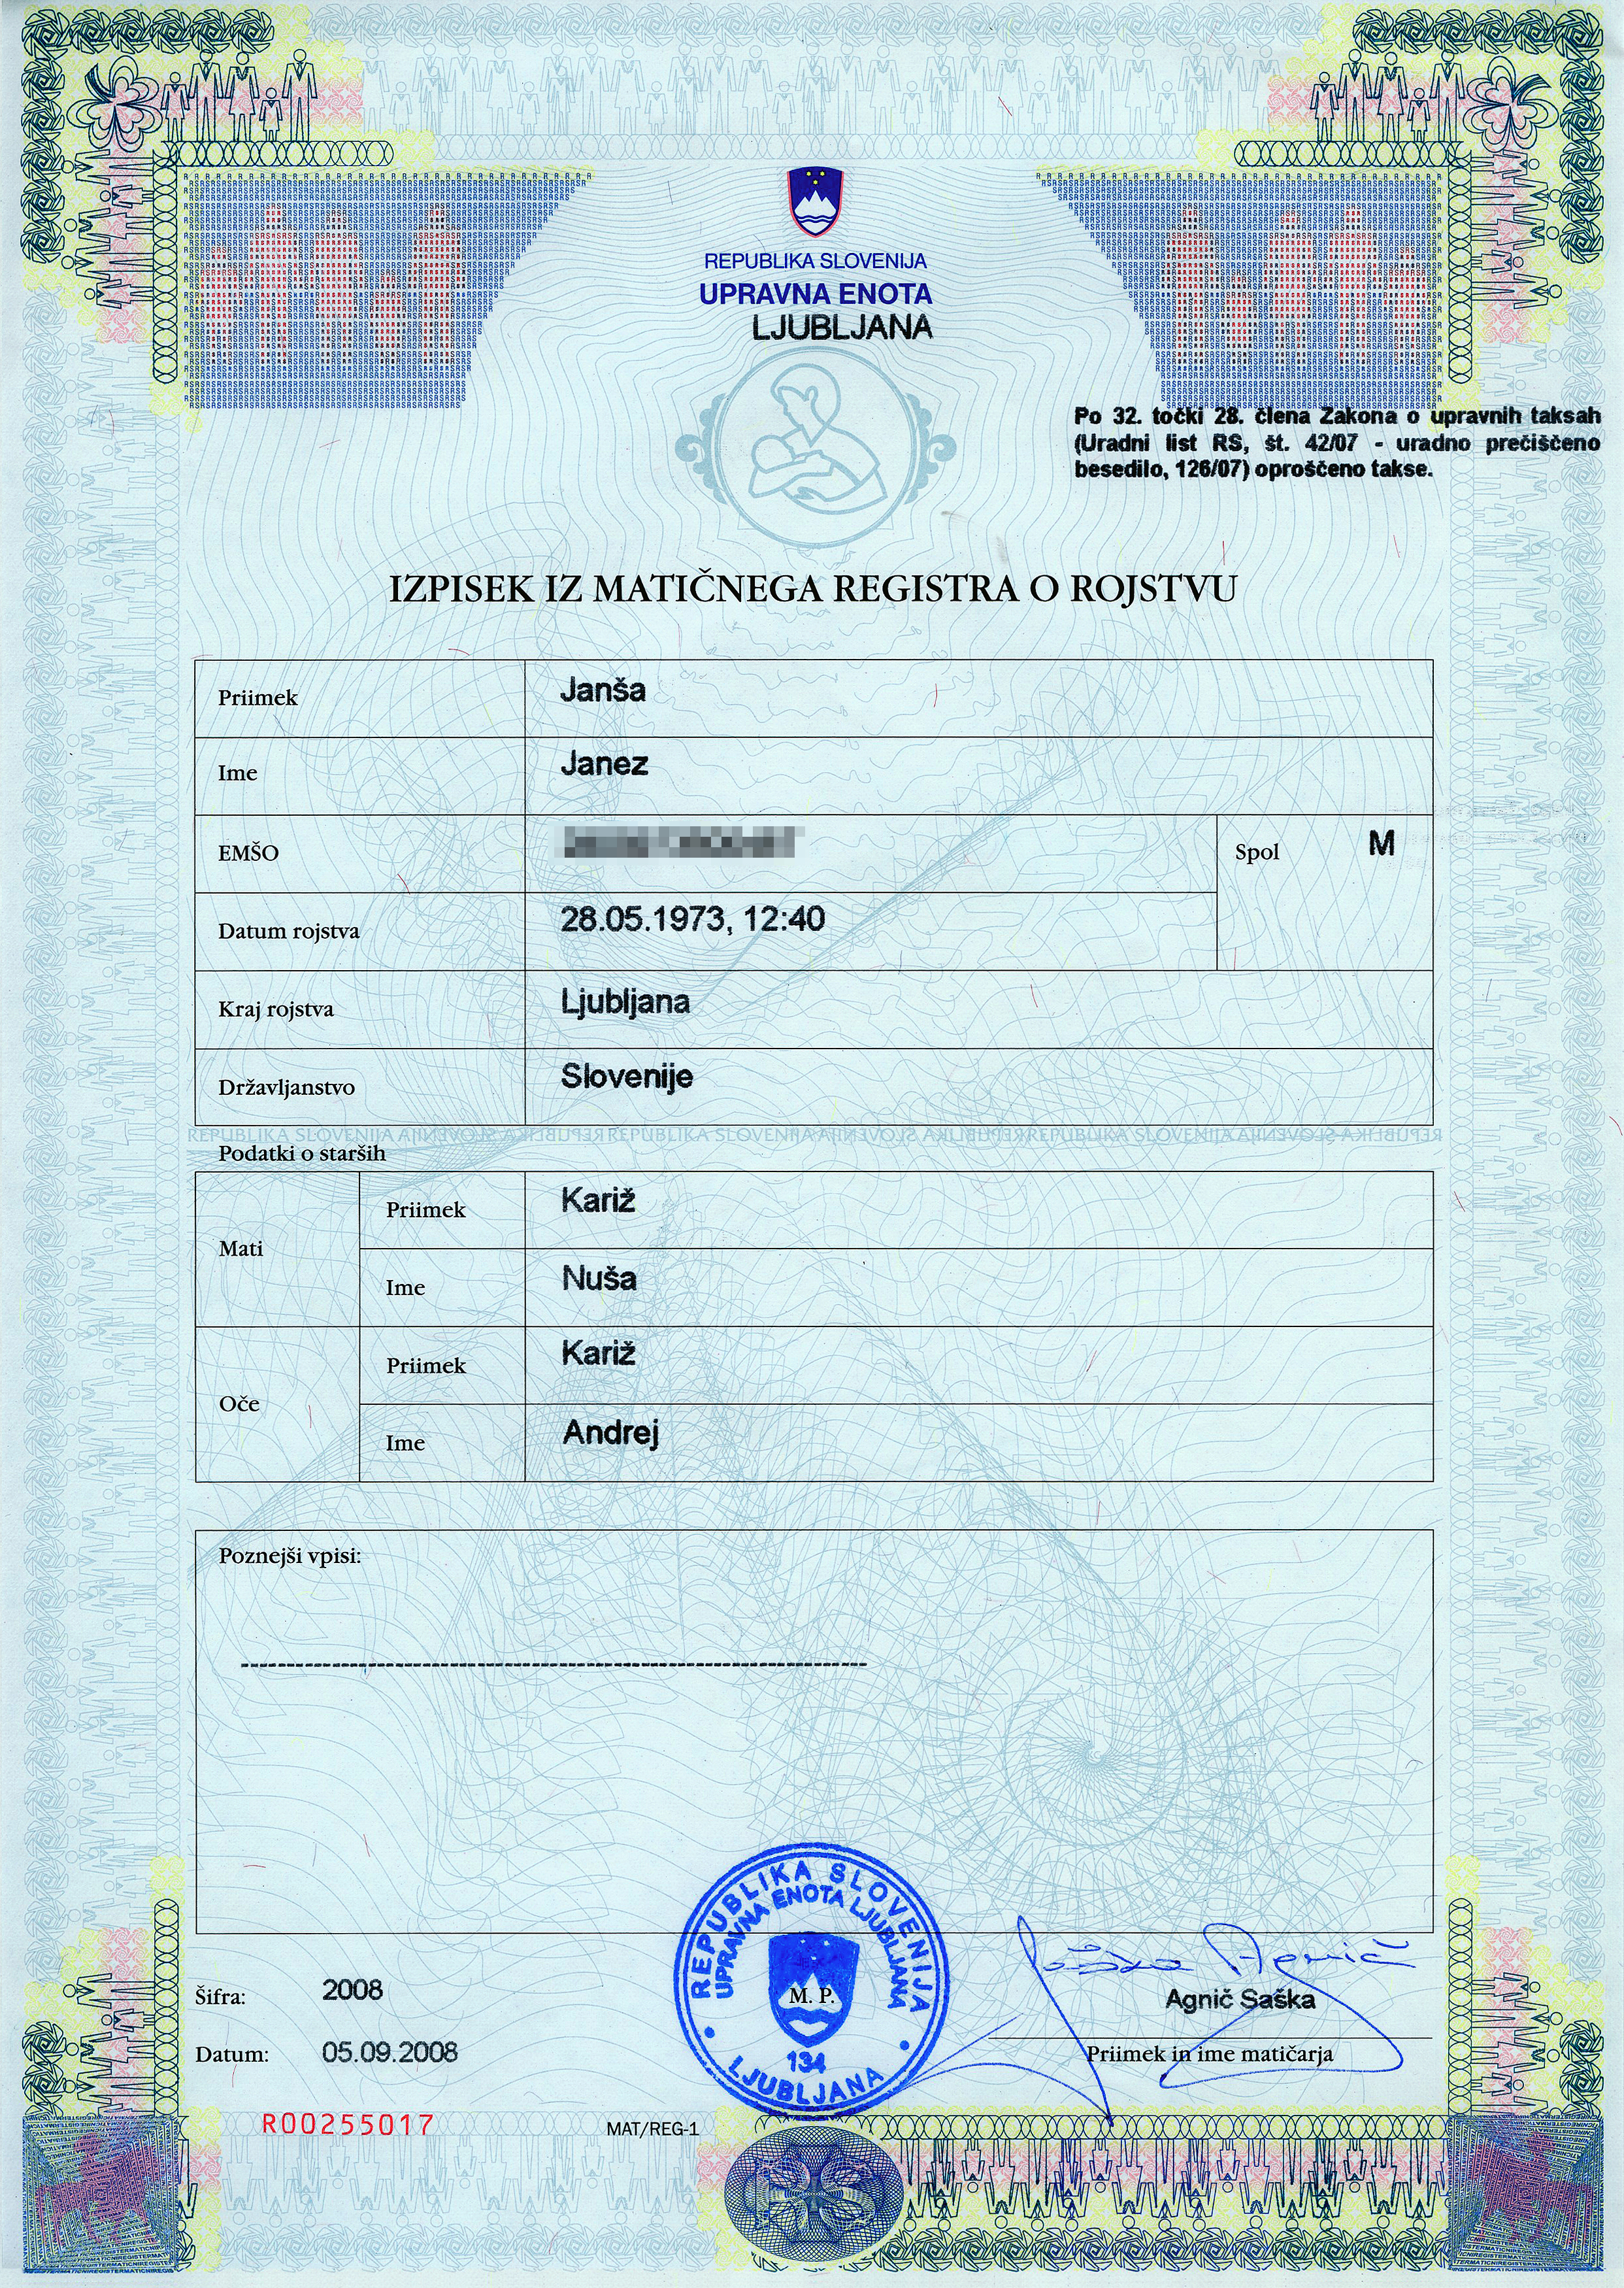 Birth Certificate Janez Jansa 3